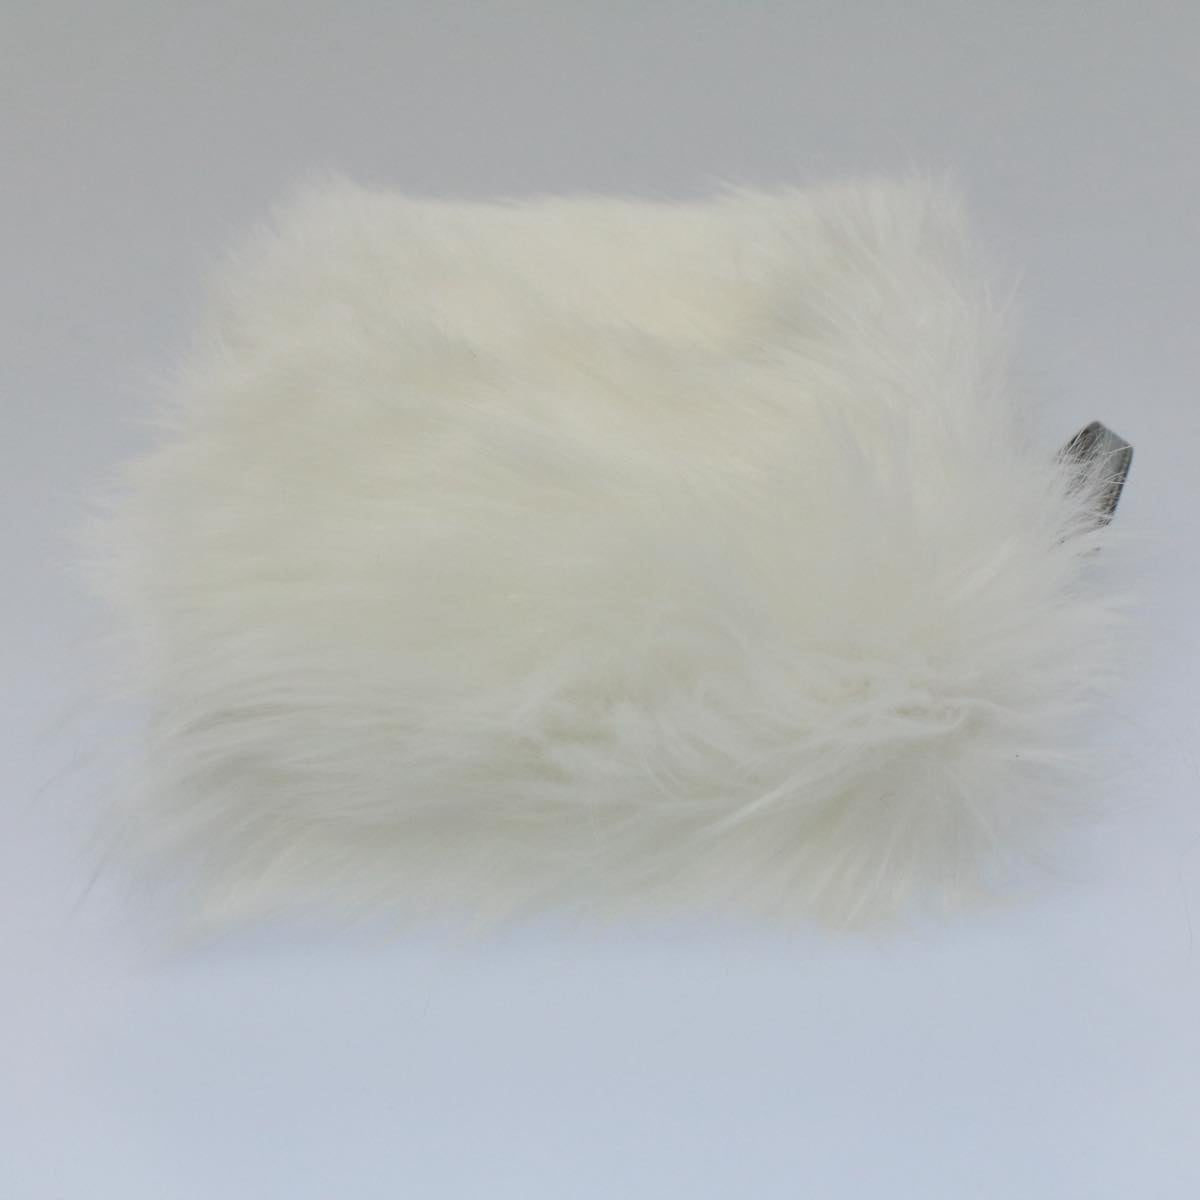 Prada Unisex Luxurious White Fur Clutch Accessory in White